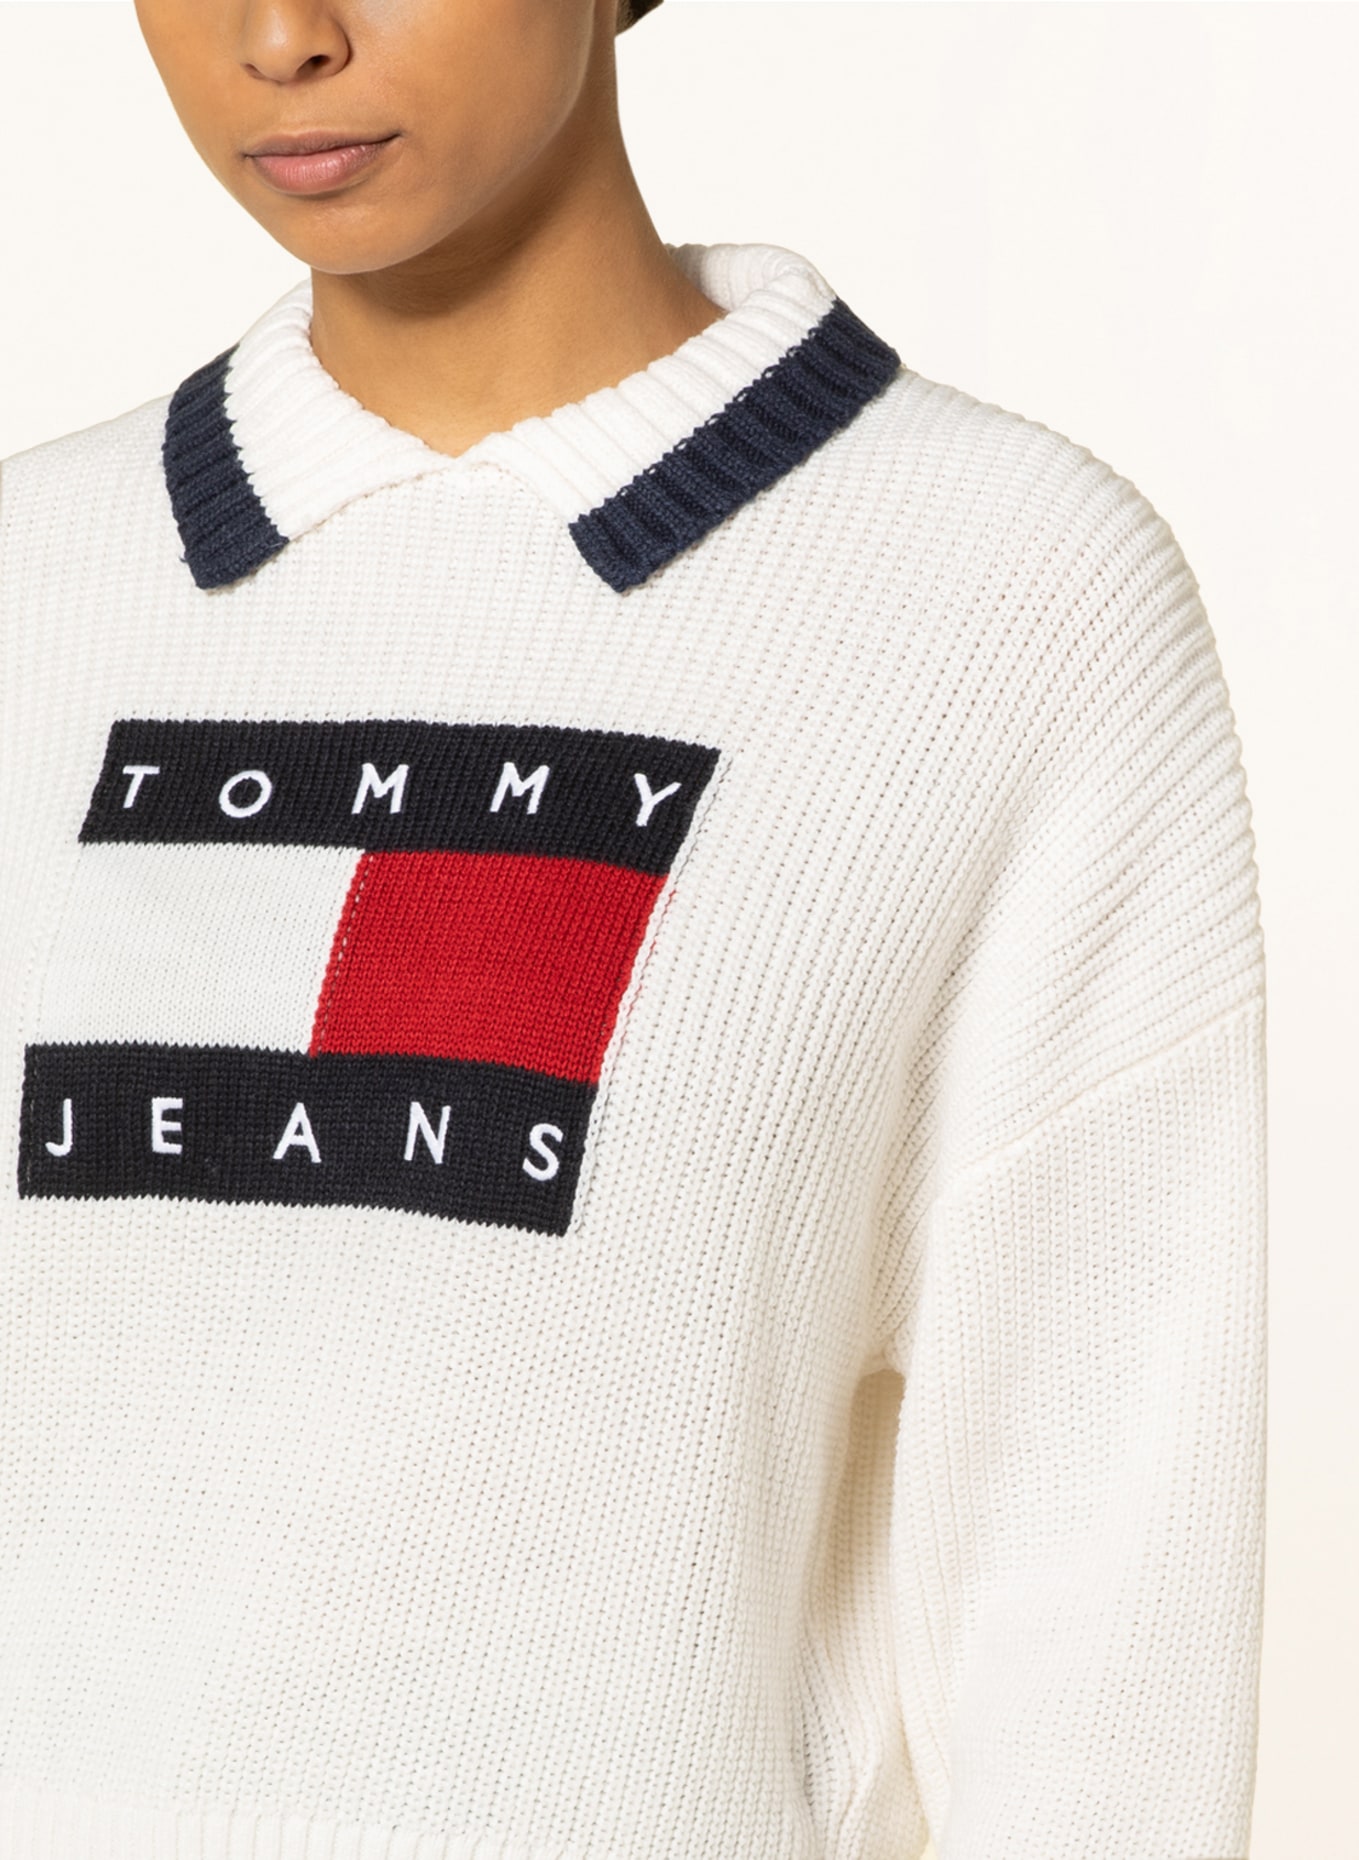 Portier Handschrift geduldig TOMMY JEANS Sweater in white/ dark blue/ red | Breuninger